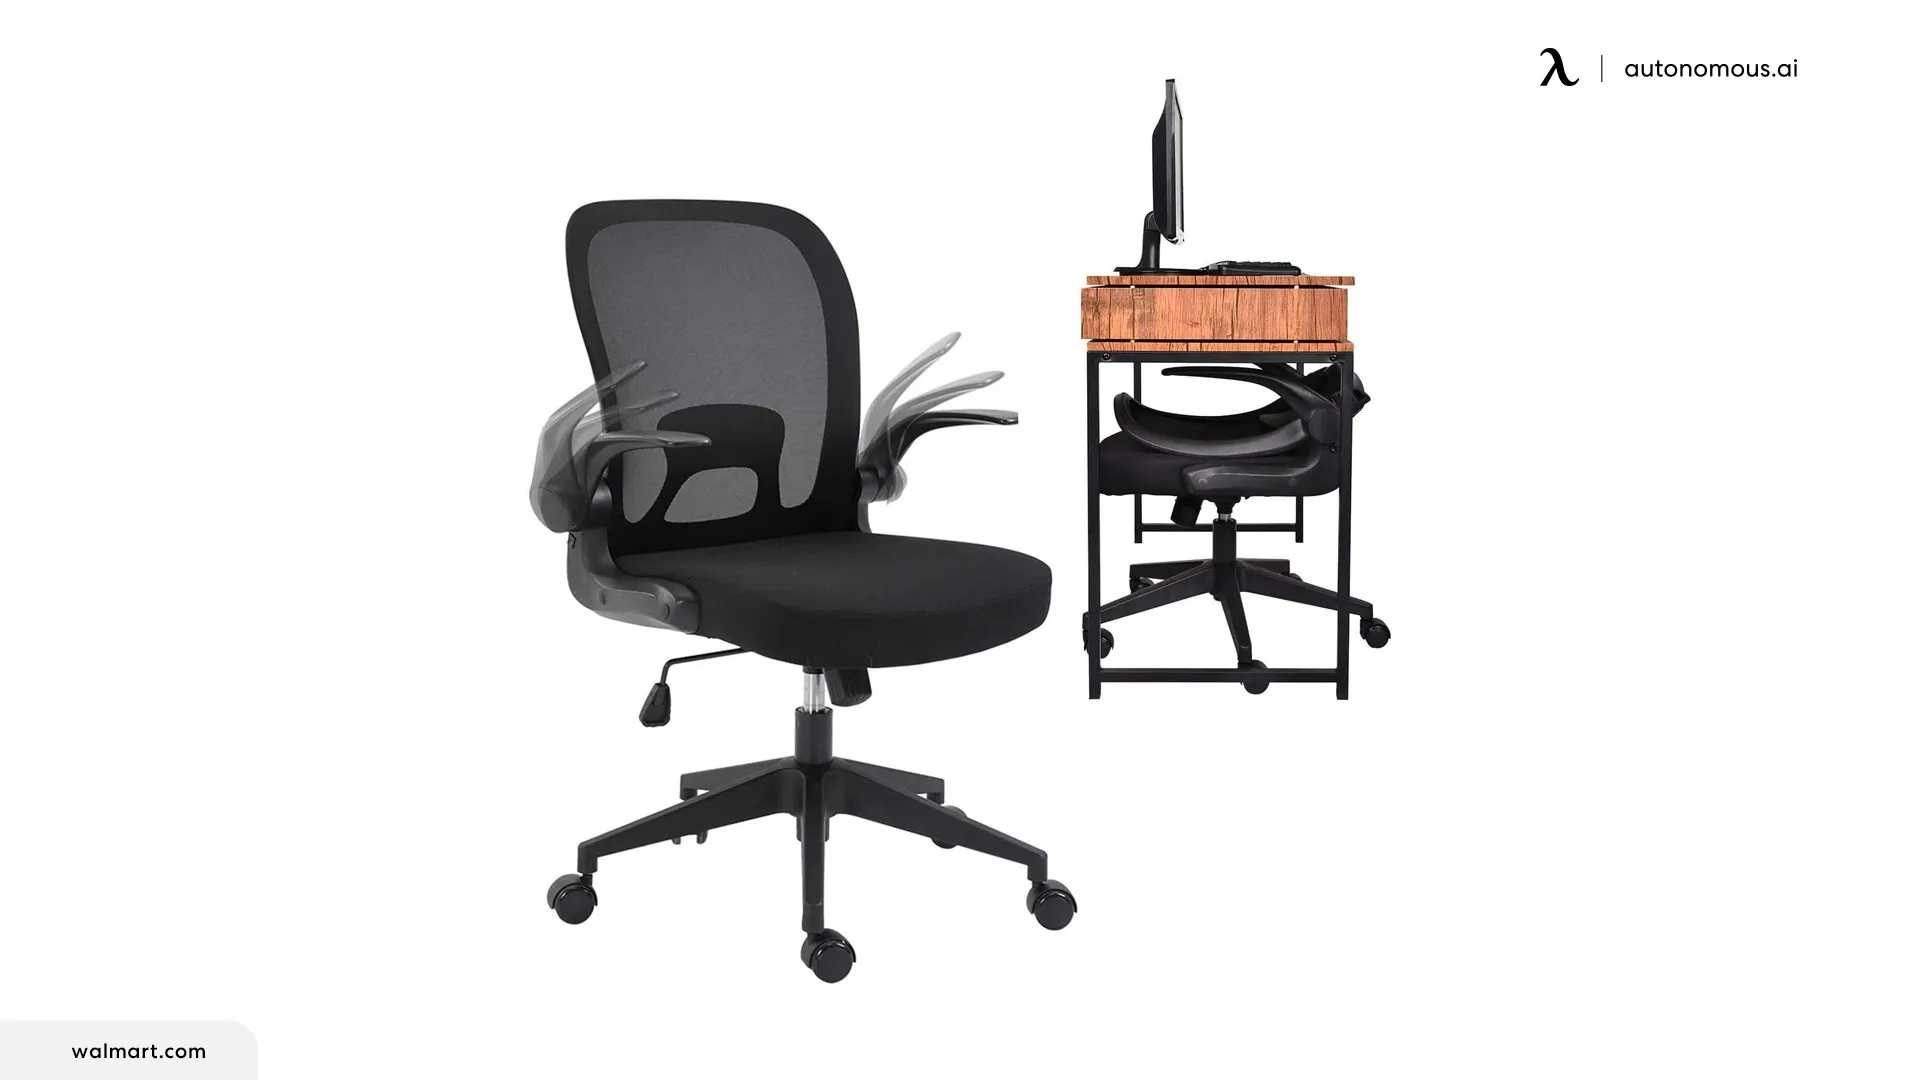 Choosing the Right Ergonomic Office Chair